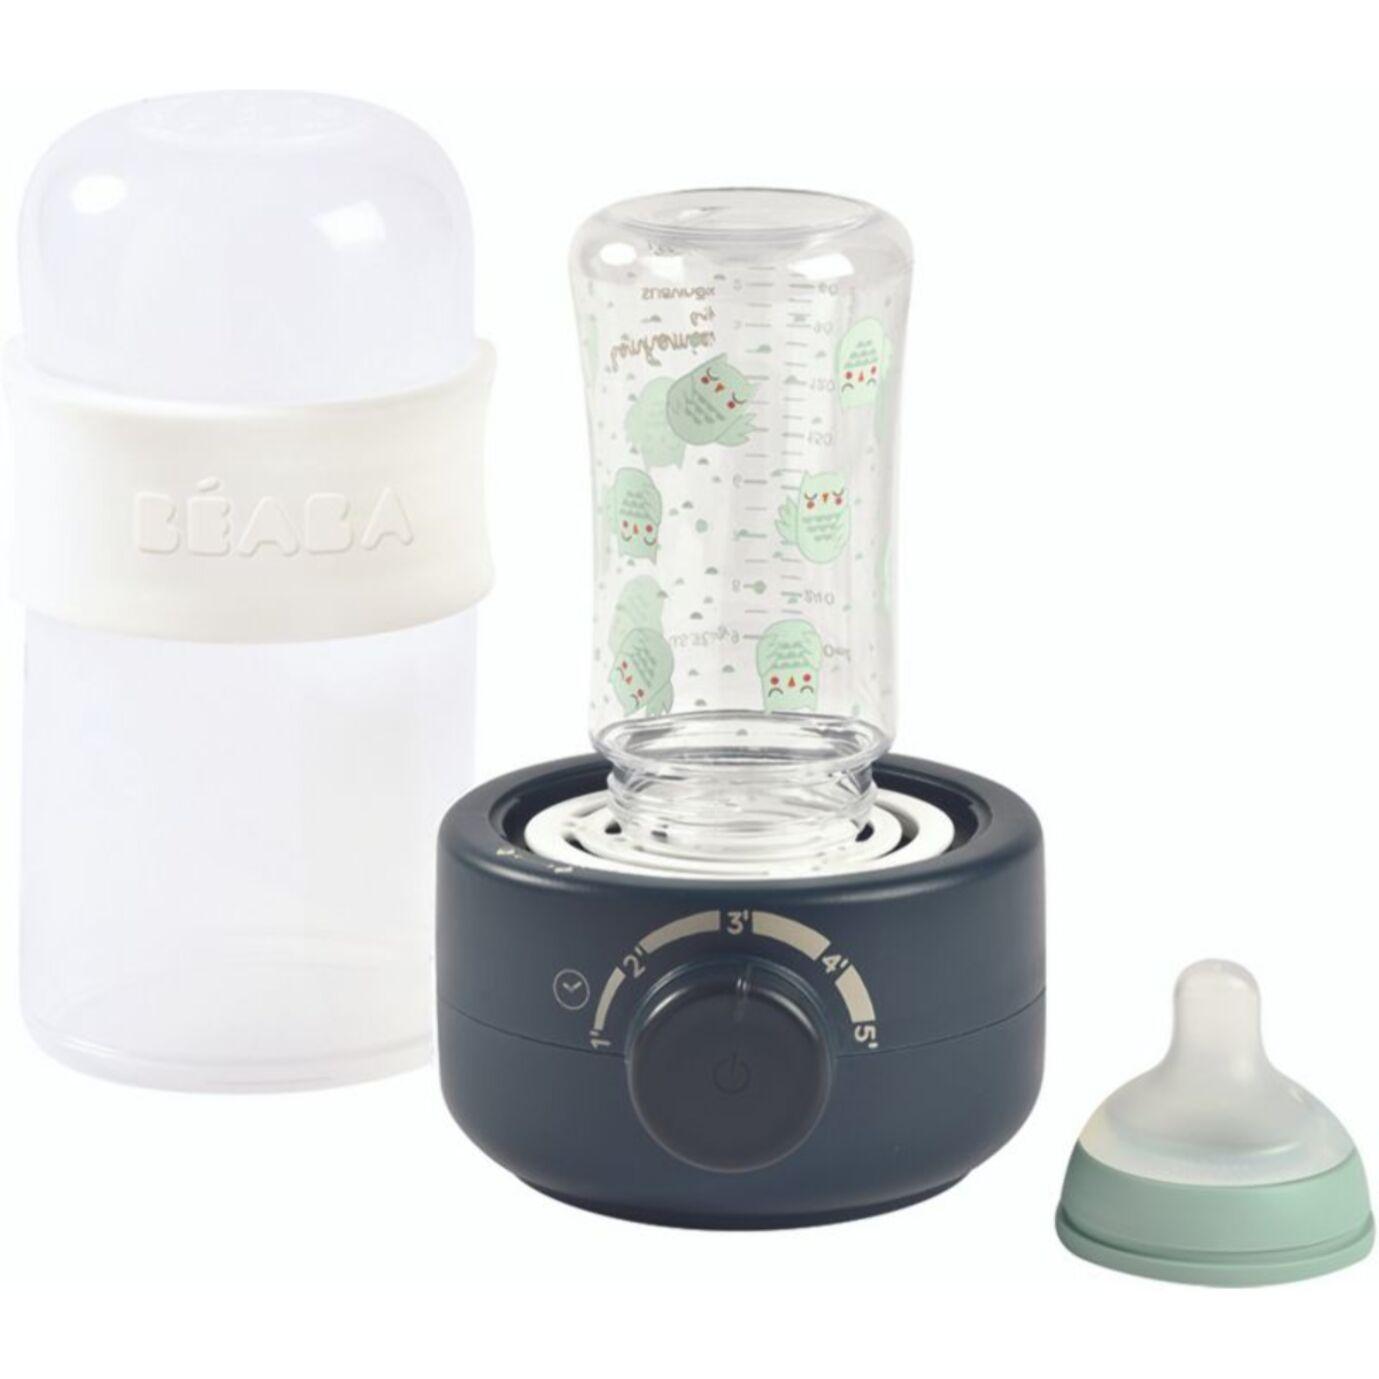 Beaba - Chauffe biberon BEABA Baby Milk Second Ultra fast Bottle Warne